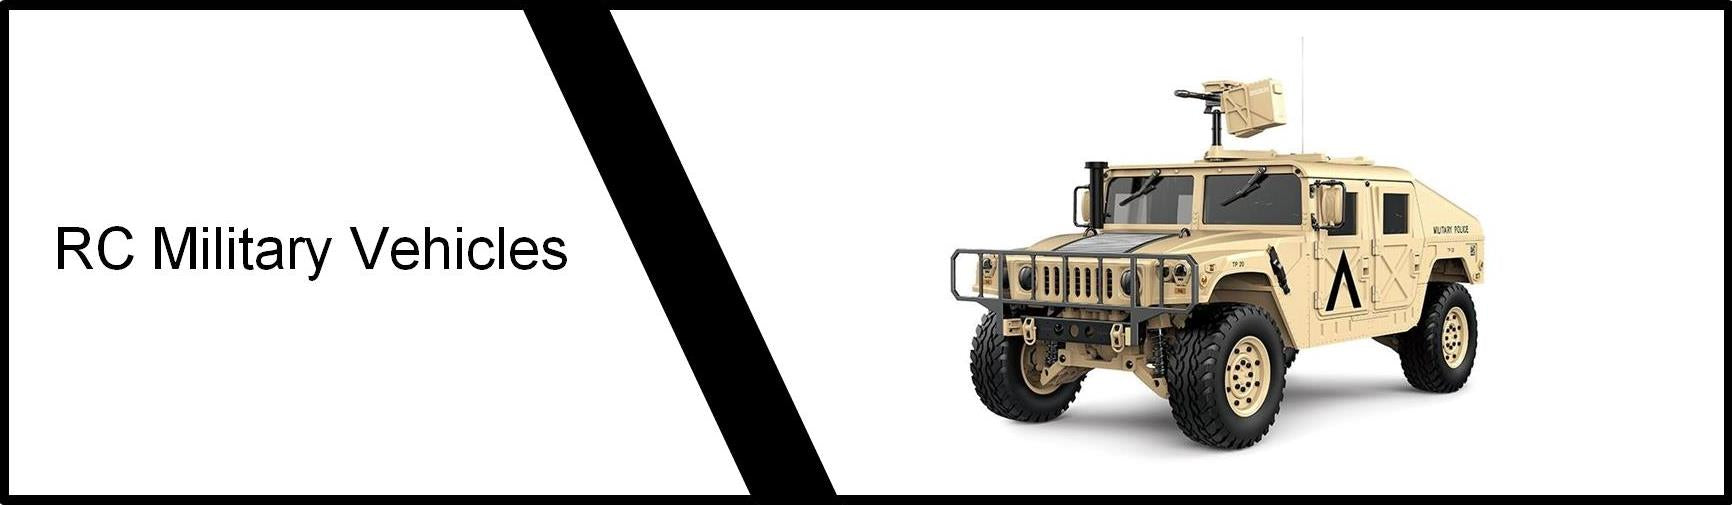 RC Military Vehicles